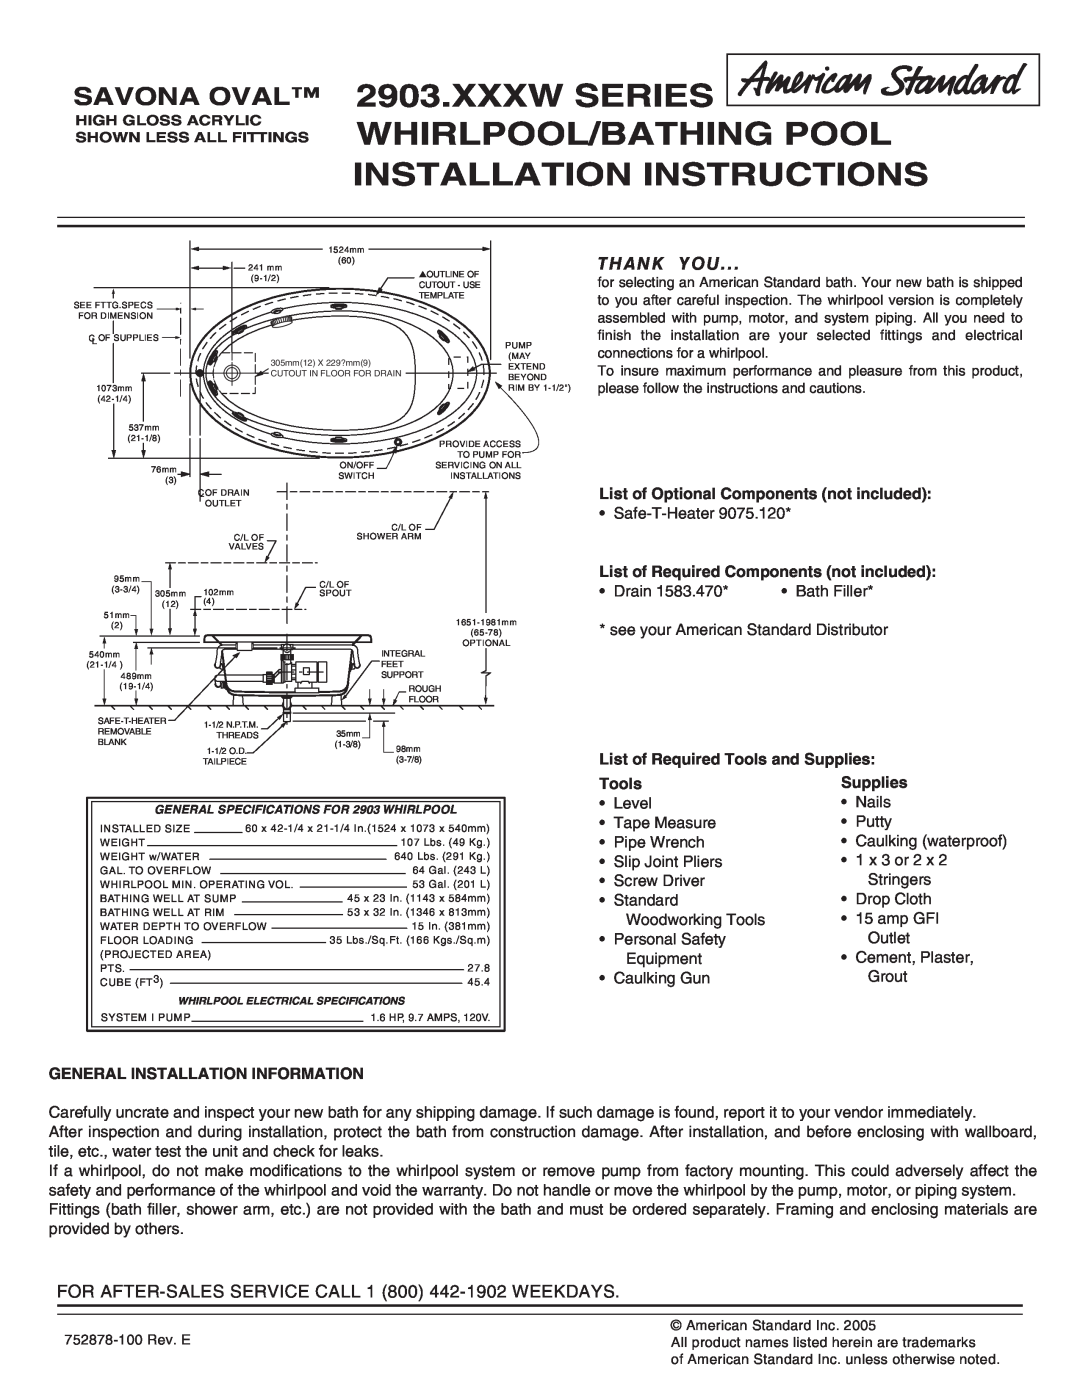 American Standard 2903.XXXW installation instructions Xxxw Series Whirlpool/Bathing Pool Installation Instructions, Tools 